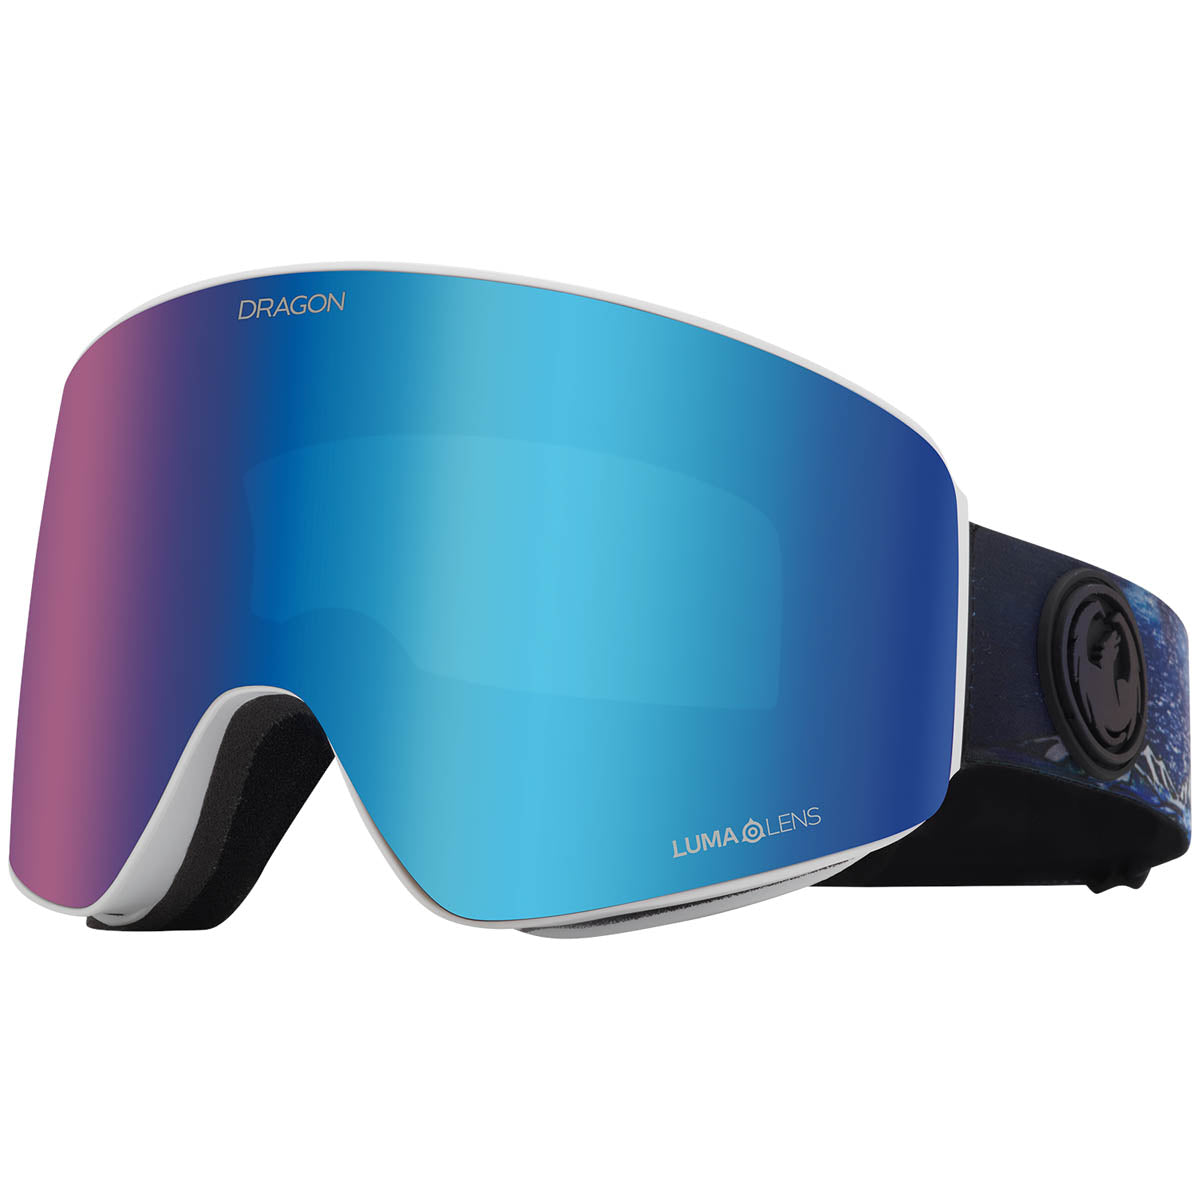 Dragon Pxv Snowboard Goggles - Iguchi/Lumalens Blue Ion image 1